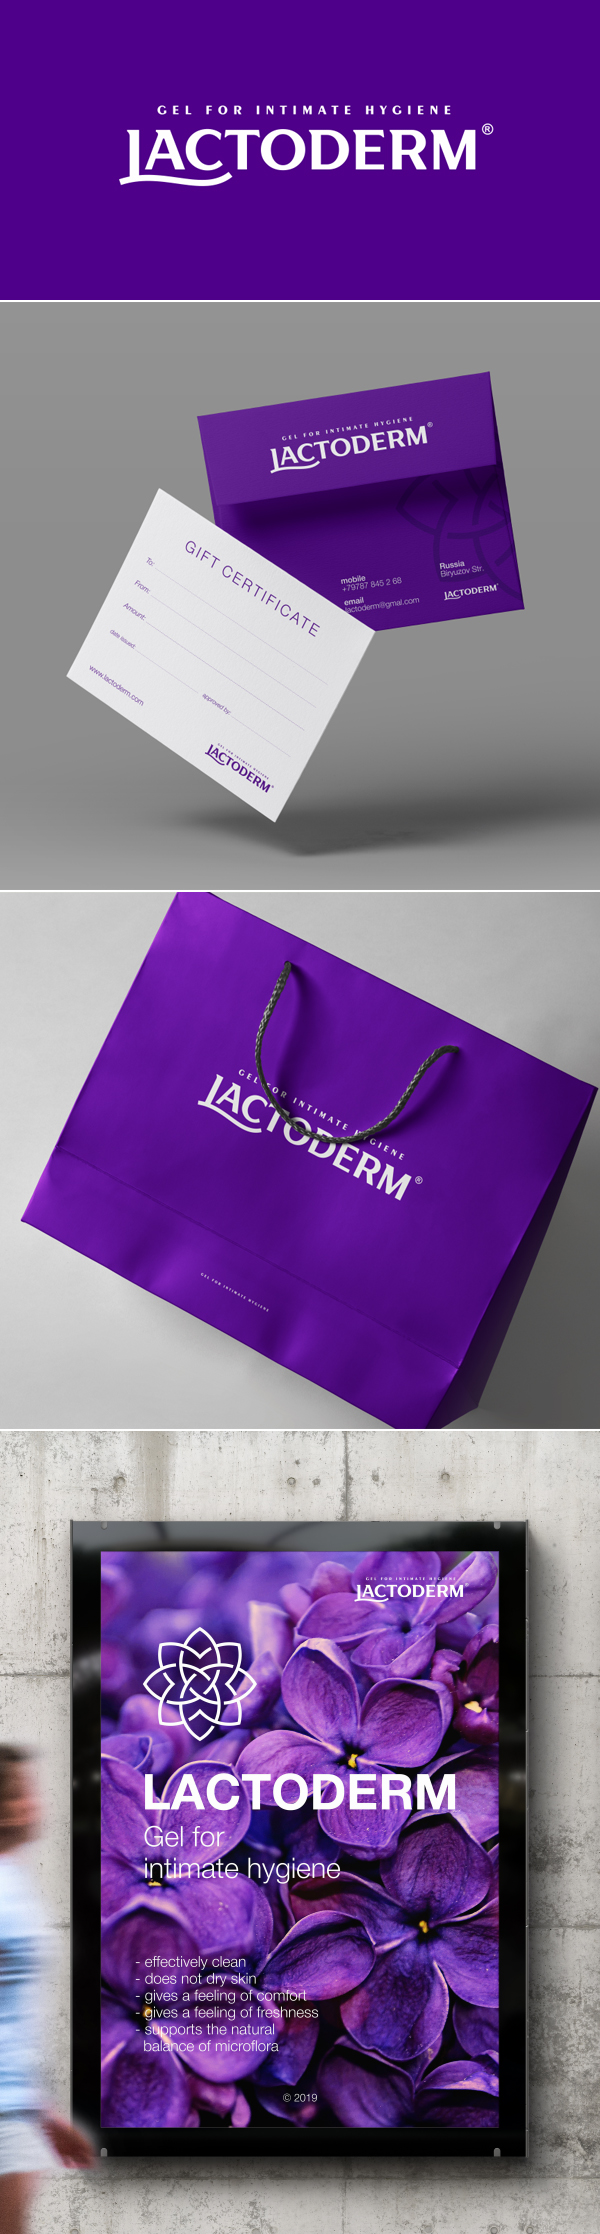 LACTODERM Branding Identity by Sveta Gorchaniuk